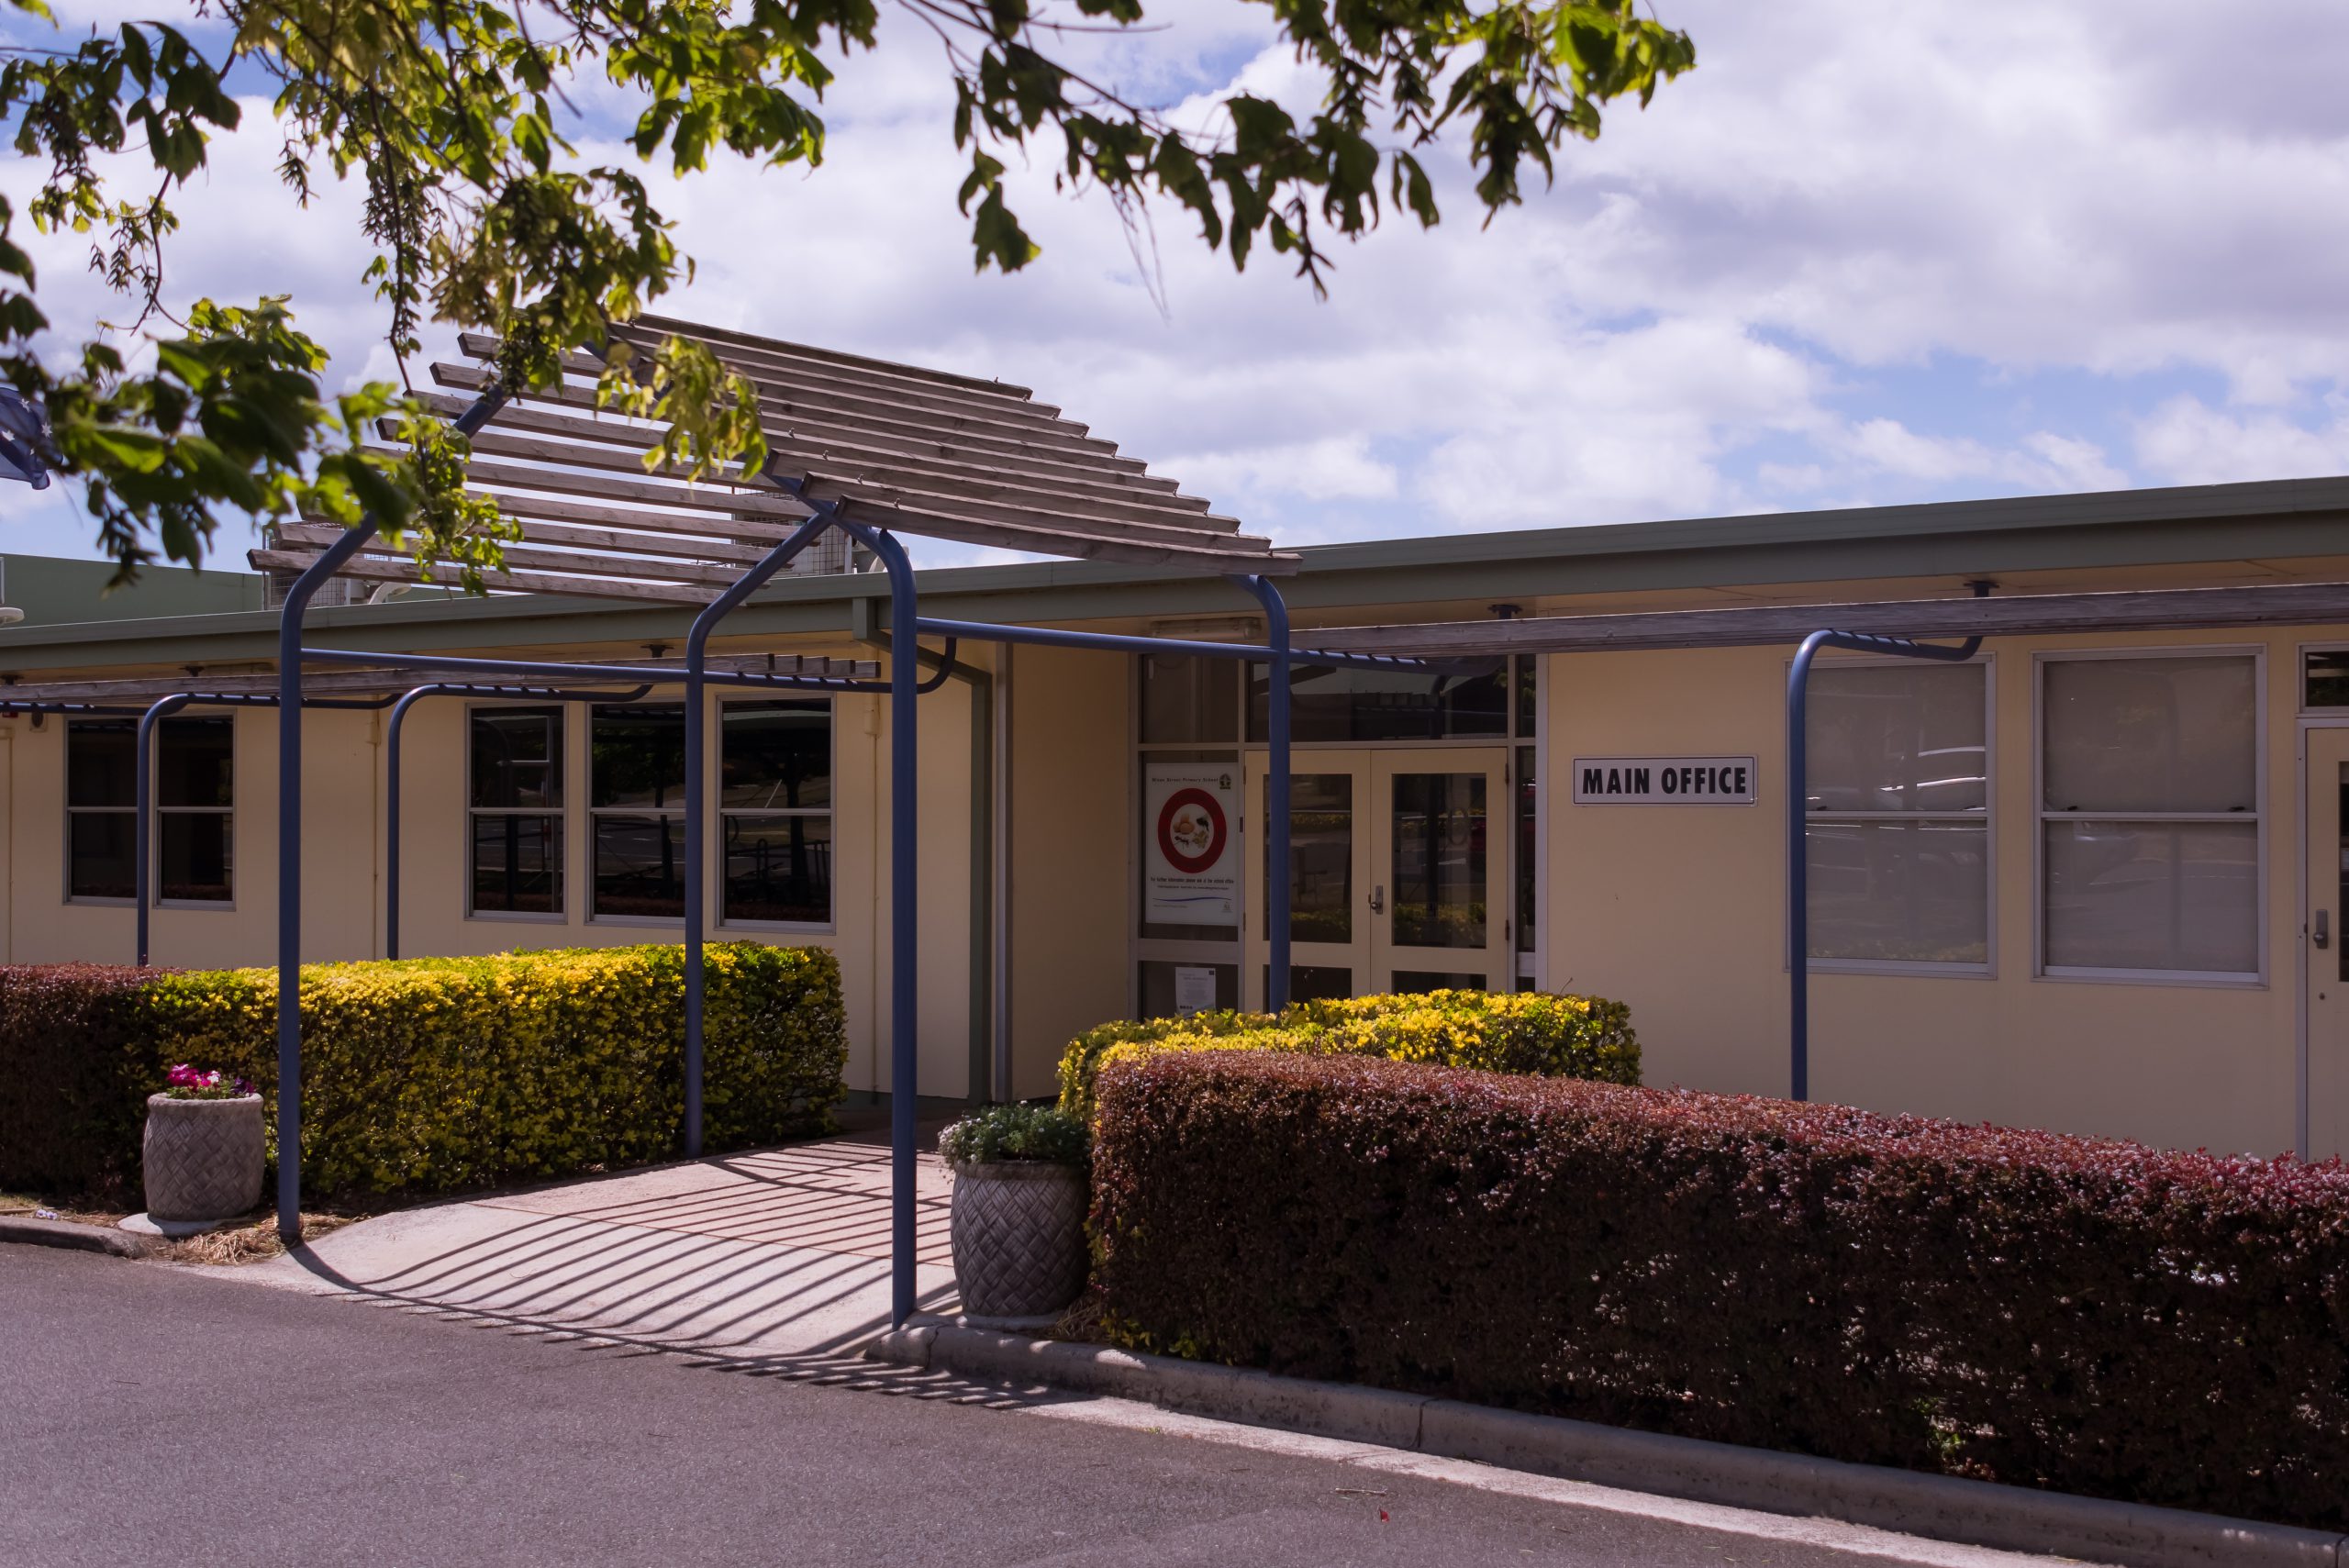 Nixon Street Primary Schools Main Office